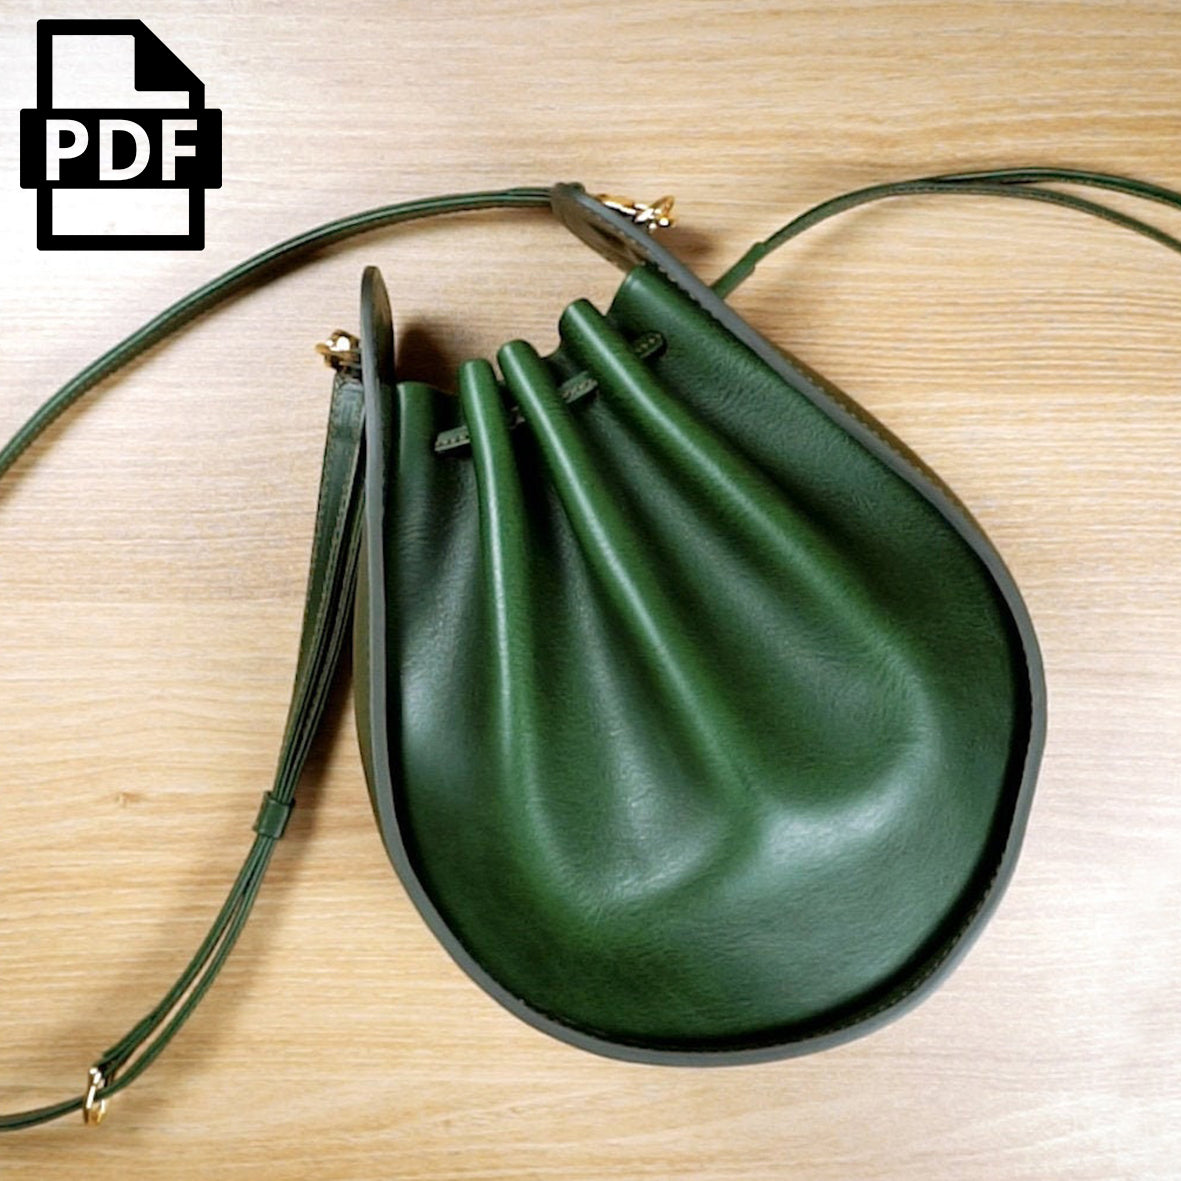 Moxic Leather Drawstring Replacement Strap for Bucket Bag Handbag